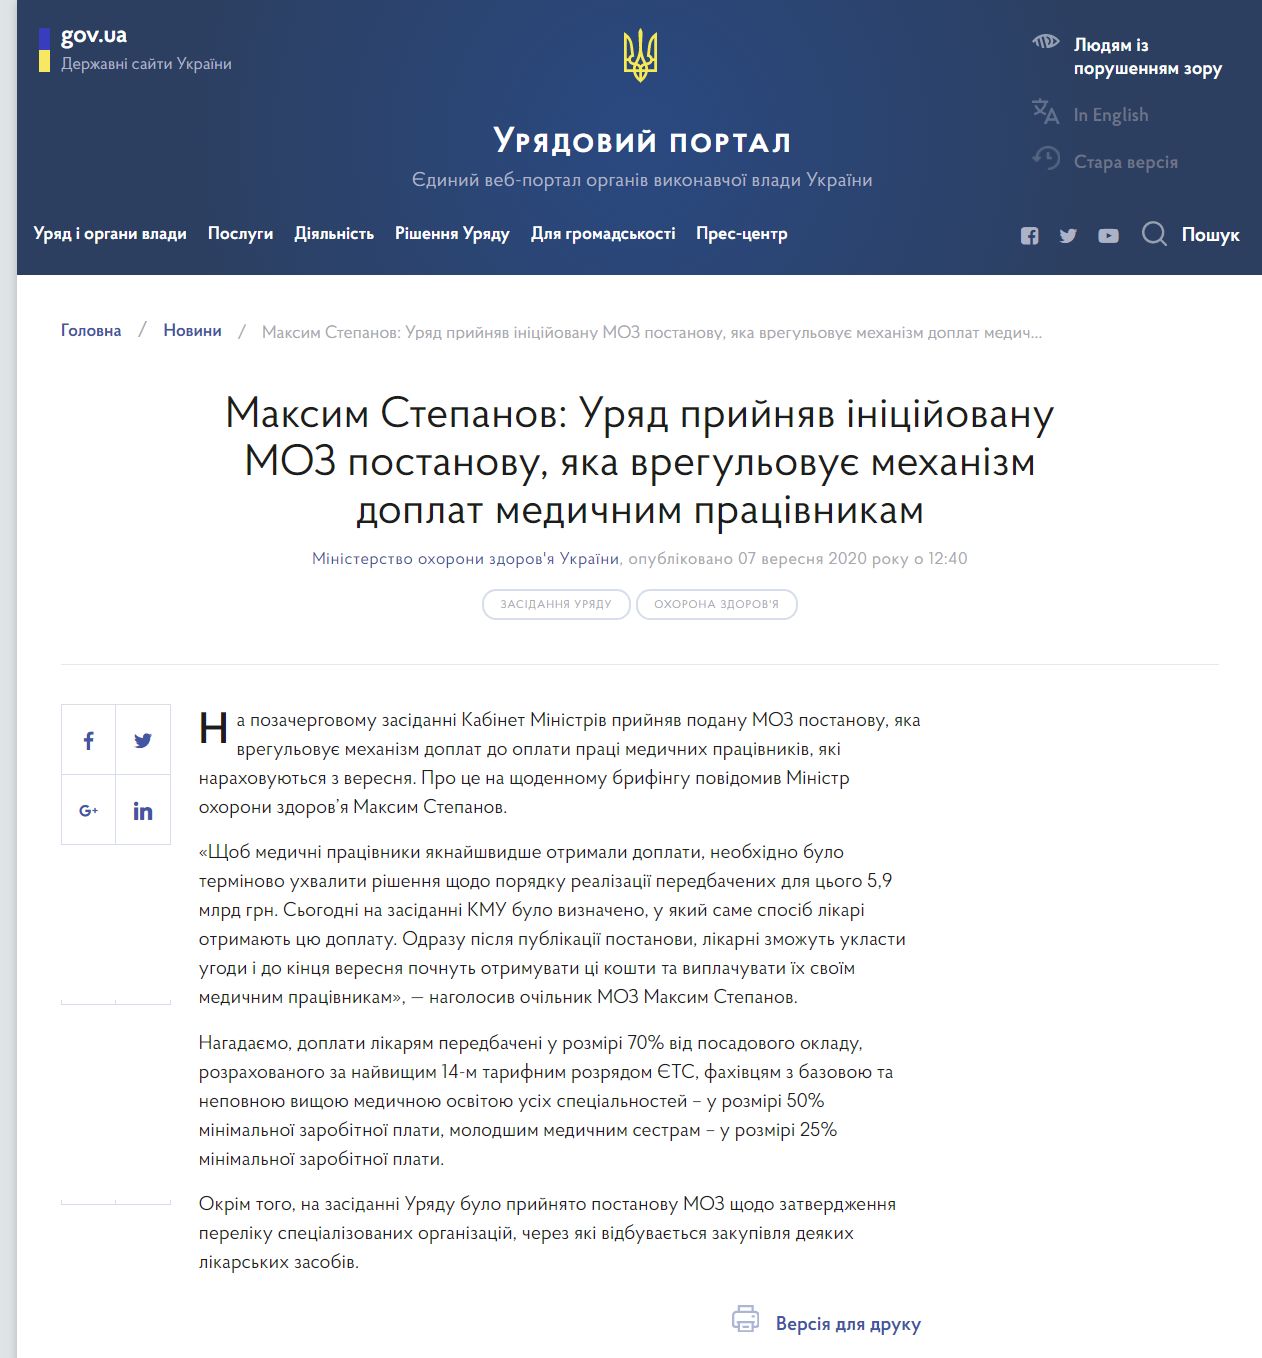 https://www.kmu.gov.ua/news/maksim-stepanov-uryad-prijnyav-inicijovanu-moz-postanovu-yaka-vregulovuye-mehanizm-doplat-medichnim-pracivnikam